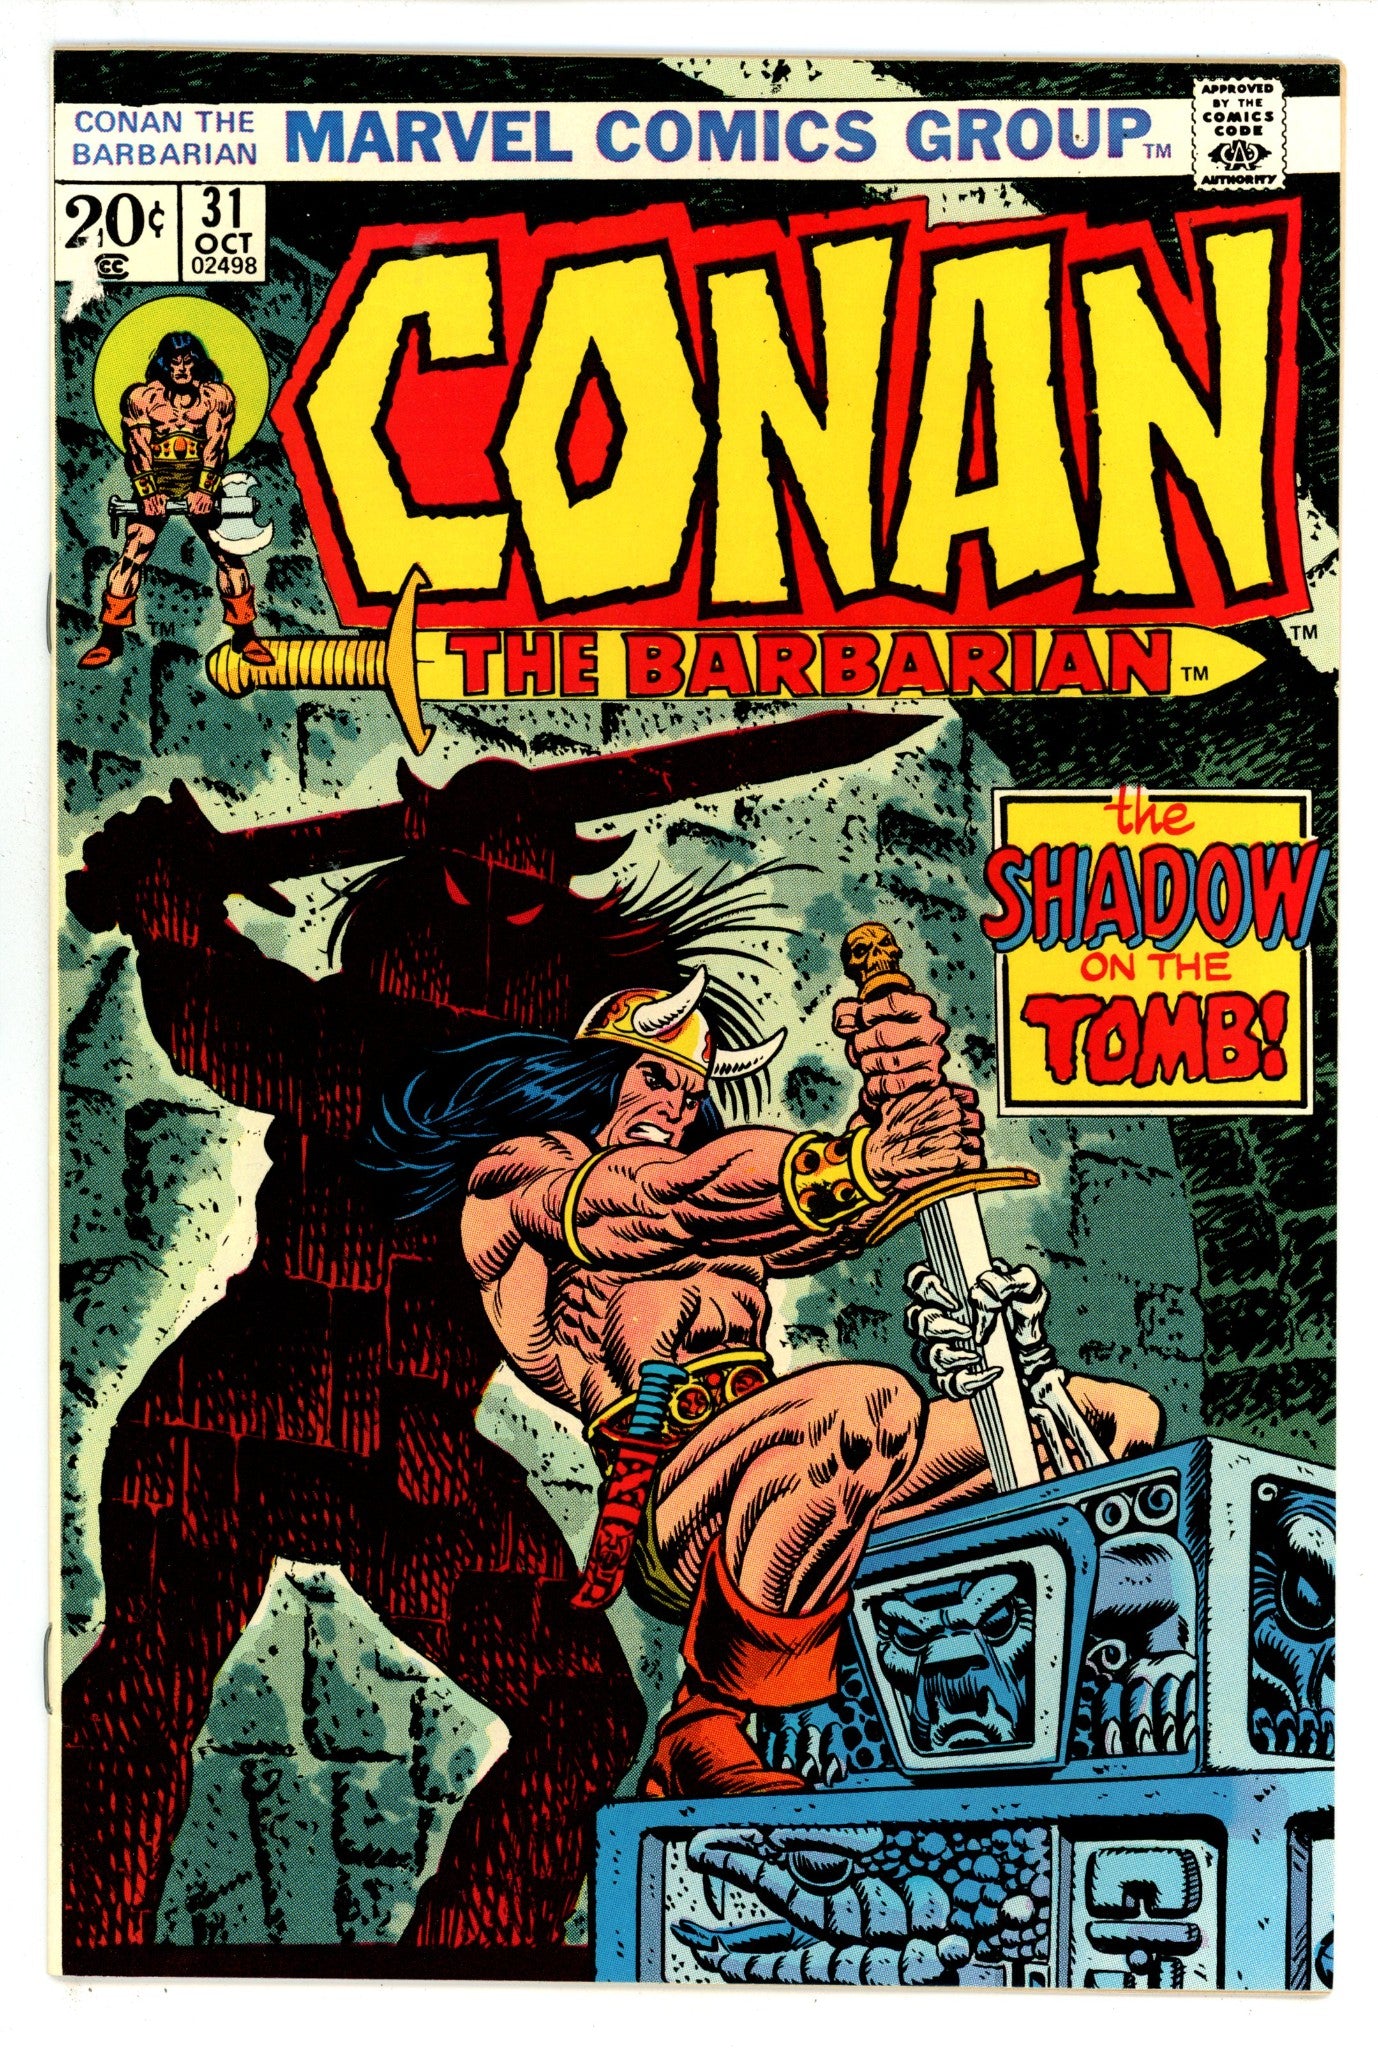 Conan the Barbarian Vol 1 31 VG/FN (5.0) (1973) 